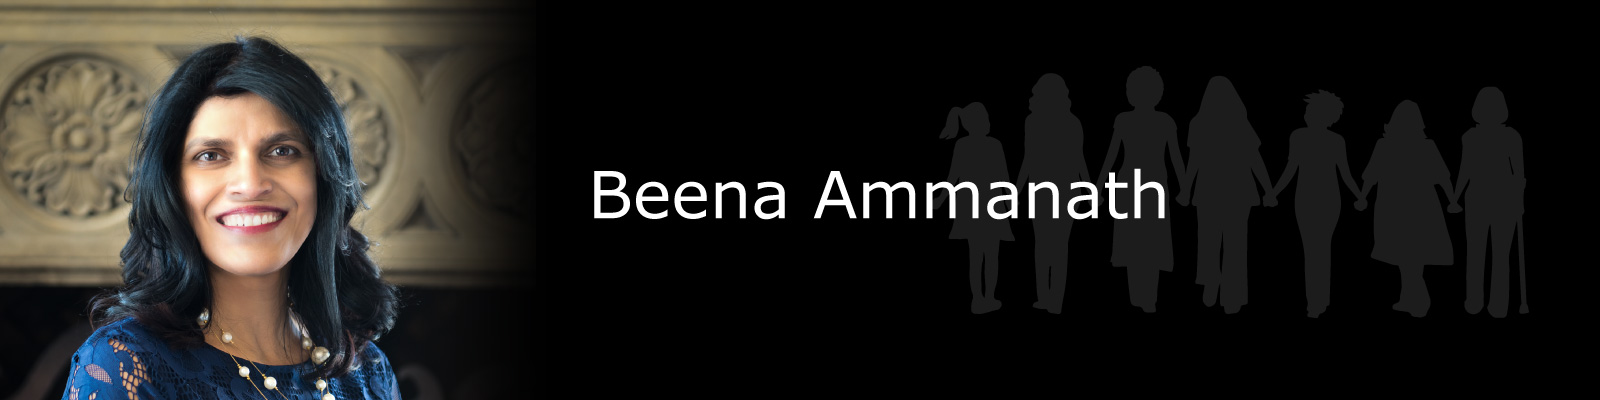 Photo of Beena Ammanath.